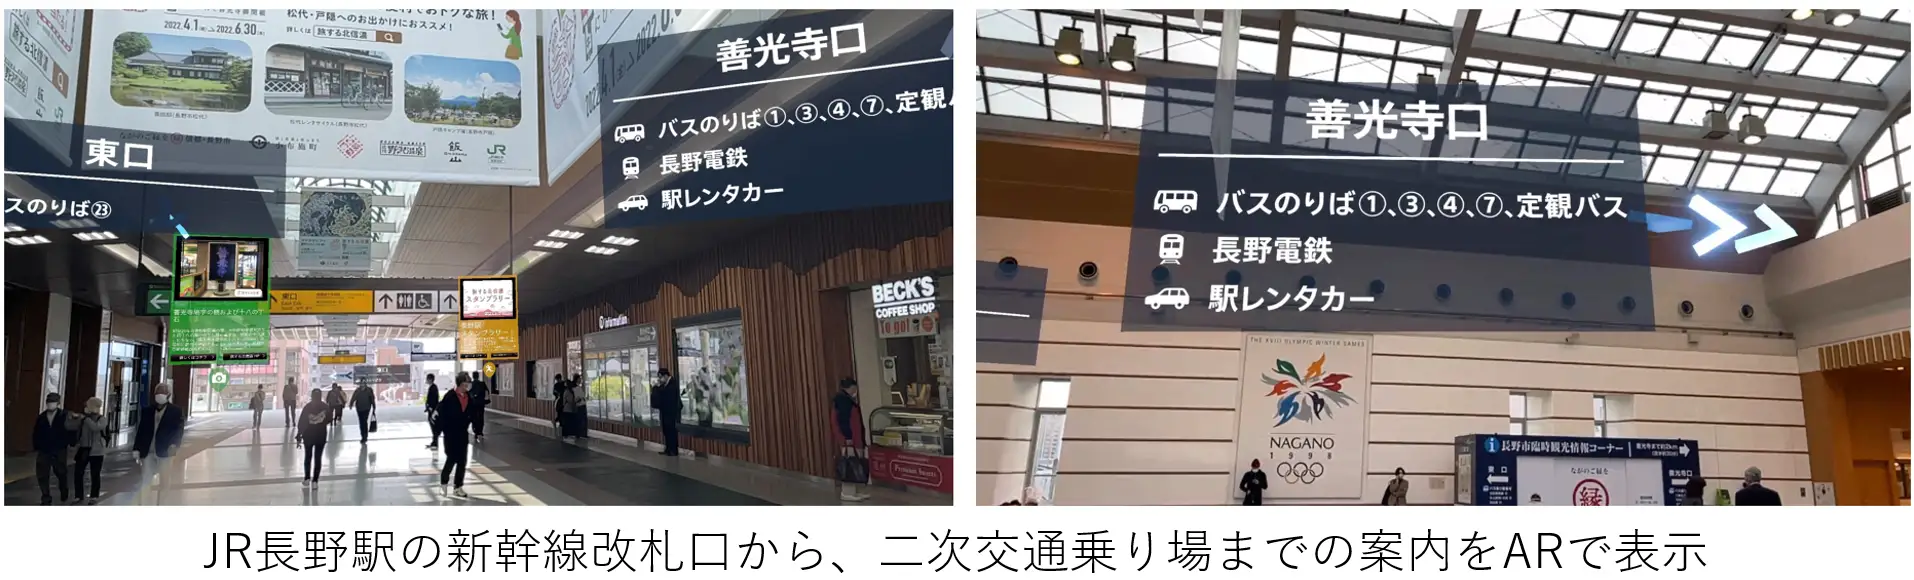 JR長野駅の新幹線改札口から、二次交通乗り場までの案内をARで表示画像